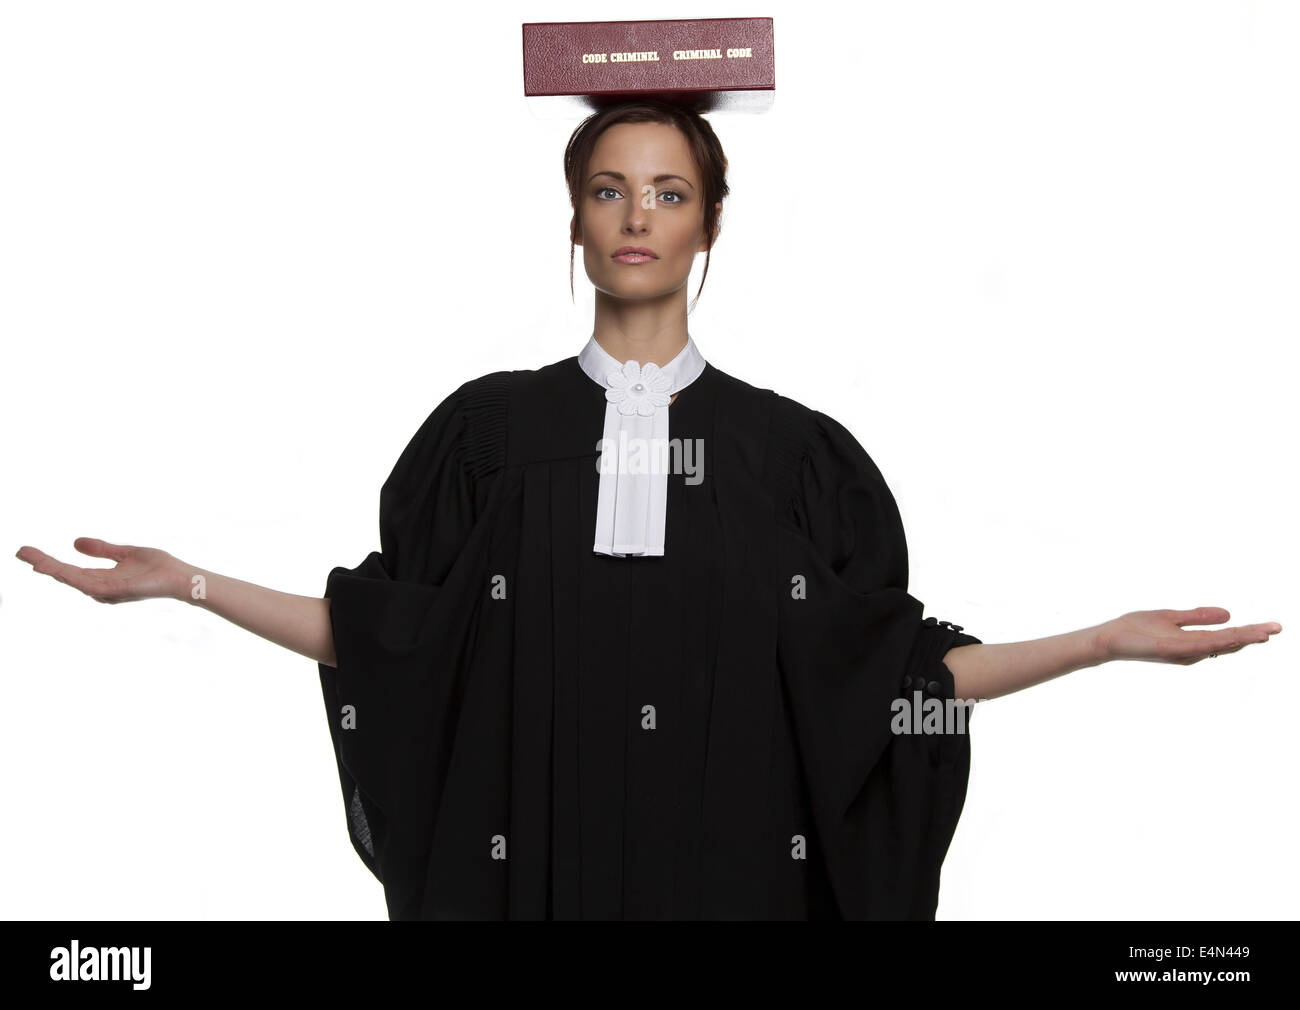 Robe d 'avocat toga abogado corte vestido magistrado, abogado, gente,  percha, negro png